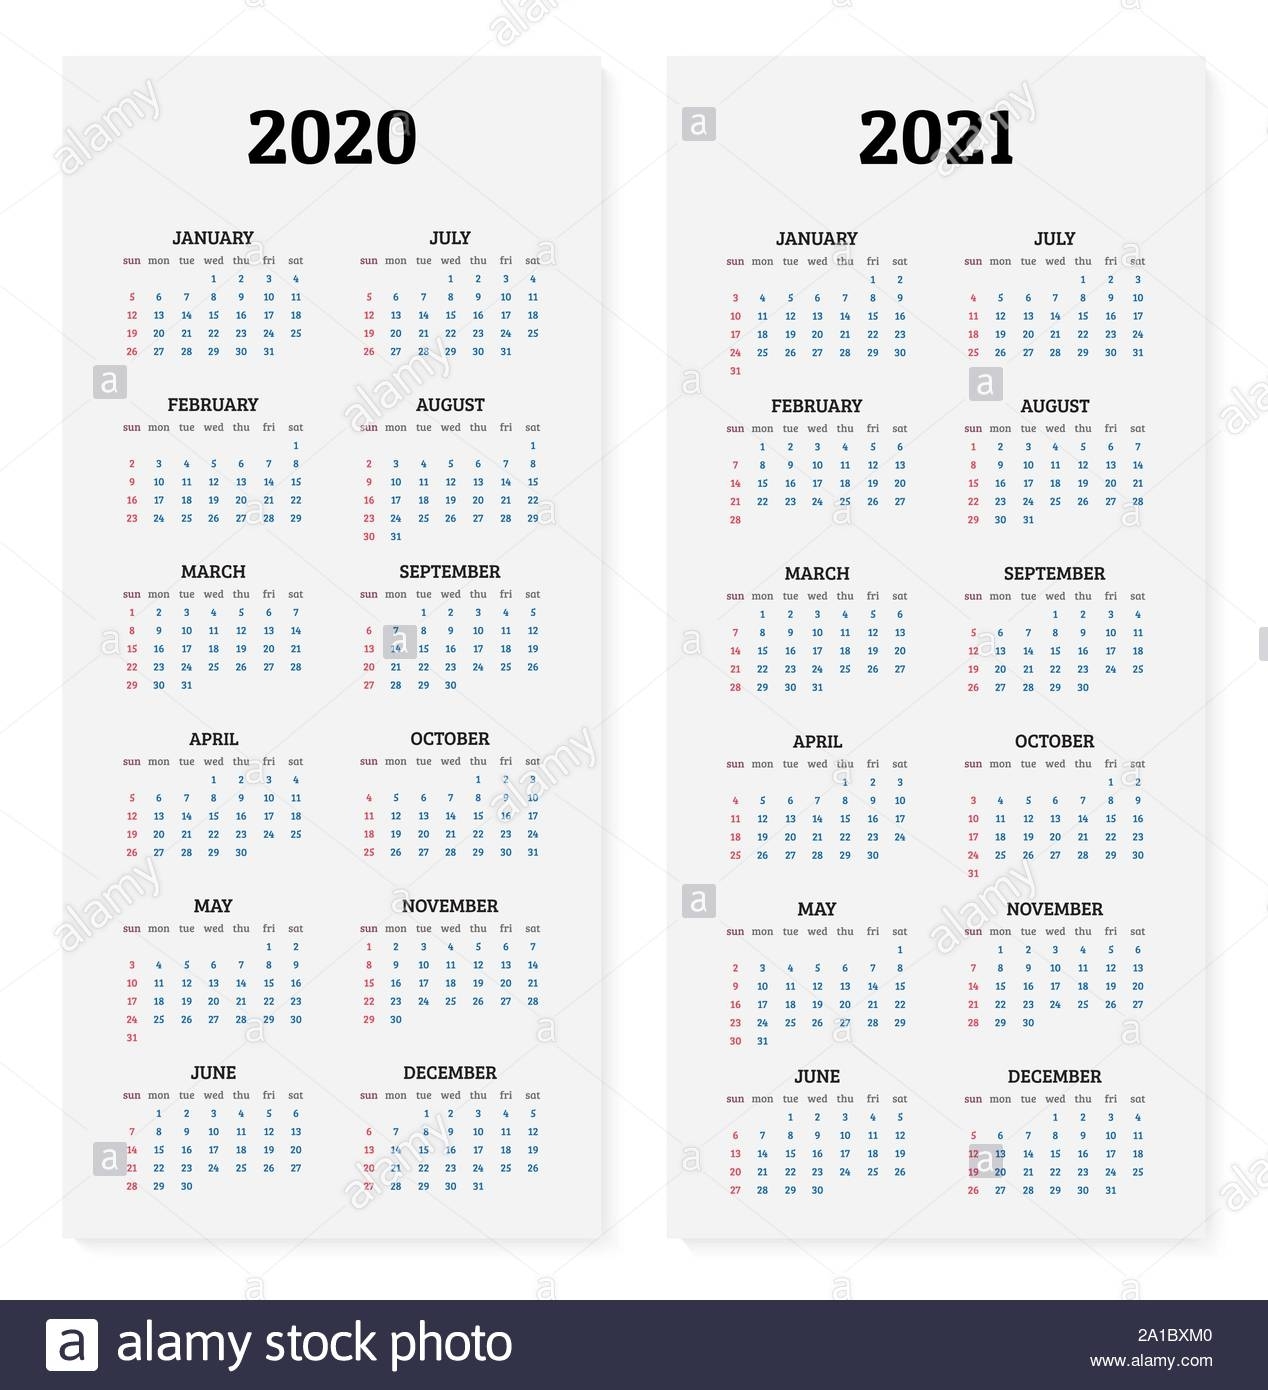 2020 And 2021 Annual Calendar Vector Illustration Stock